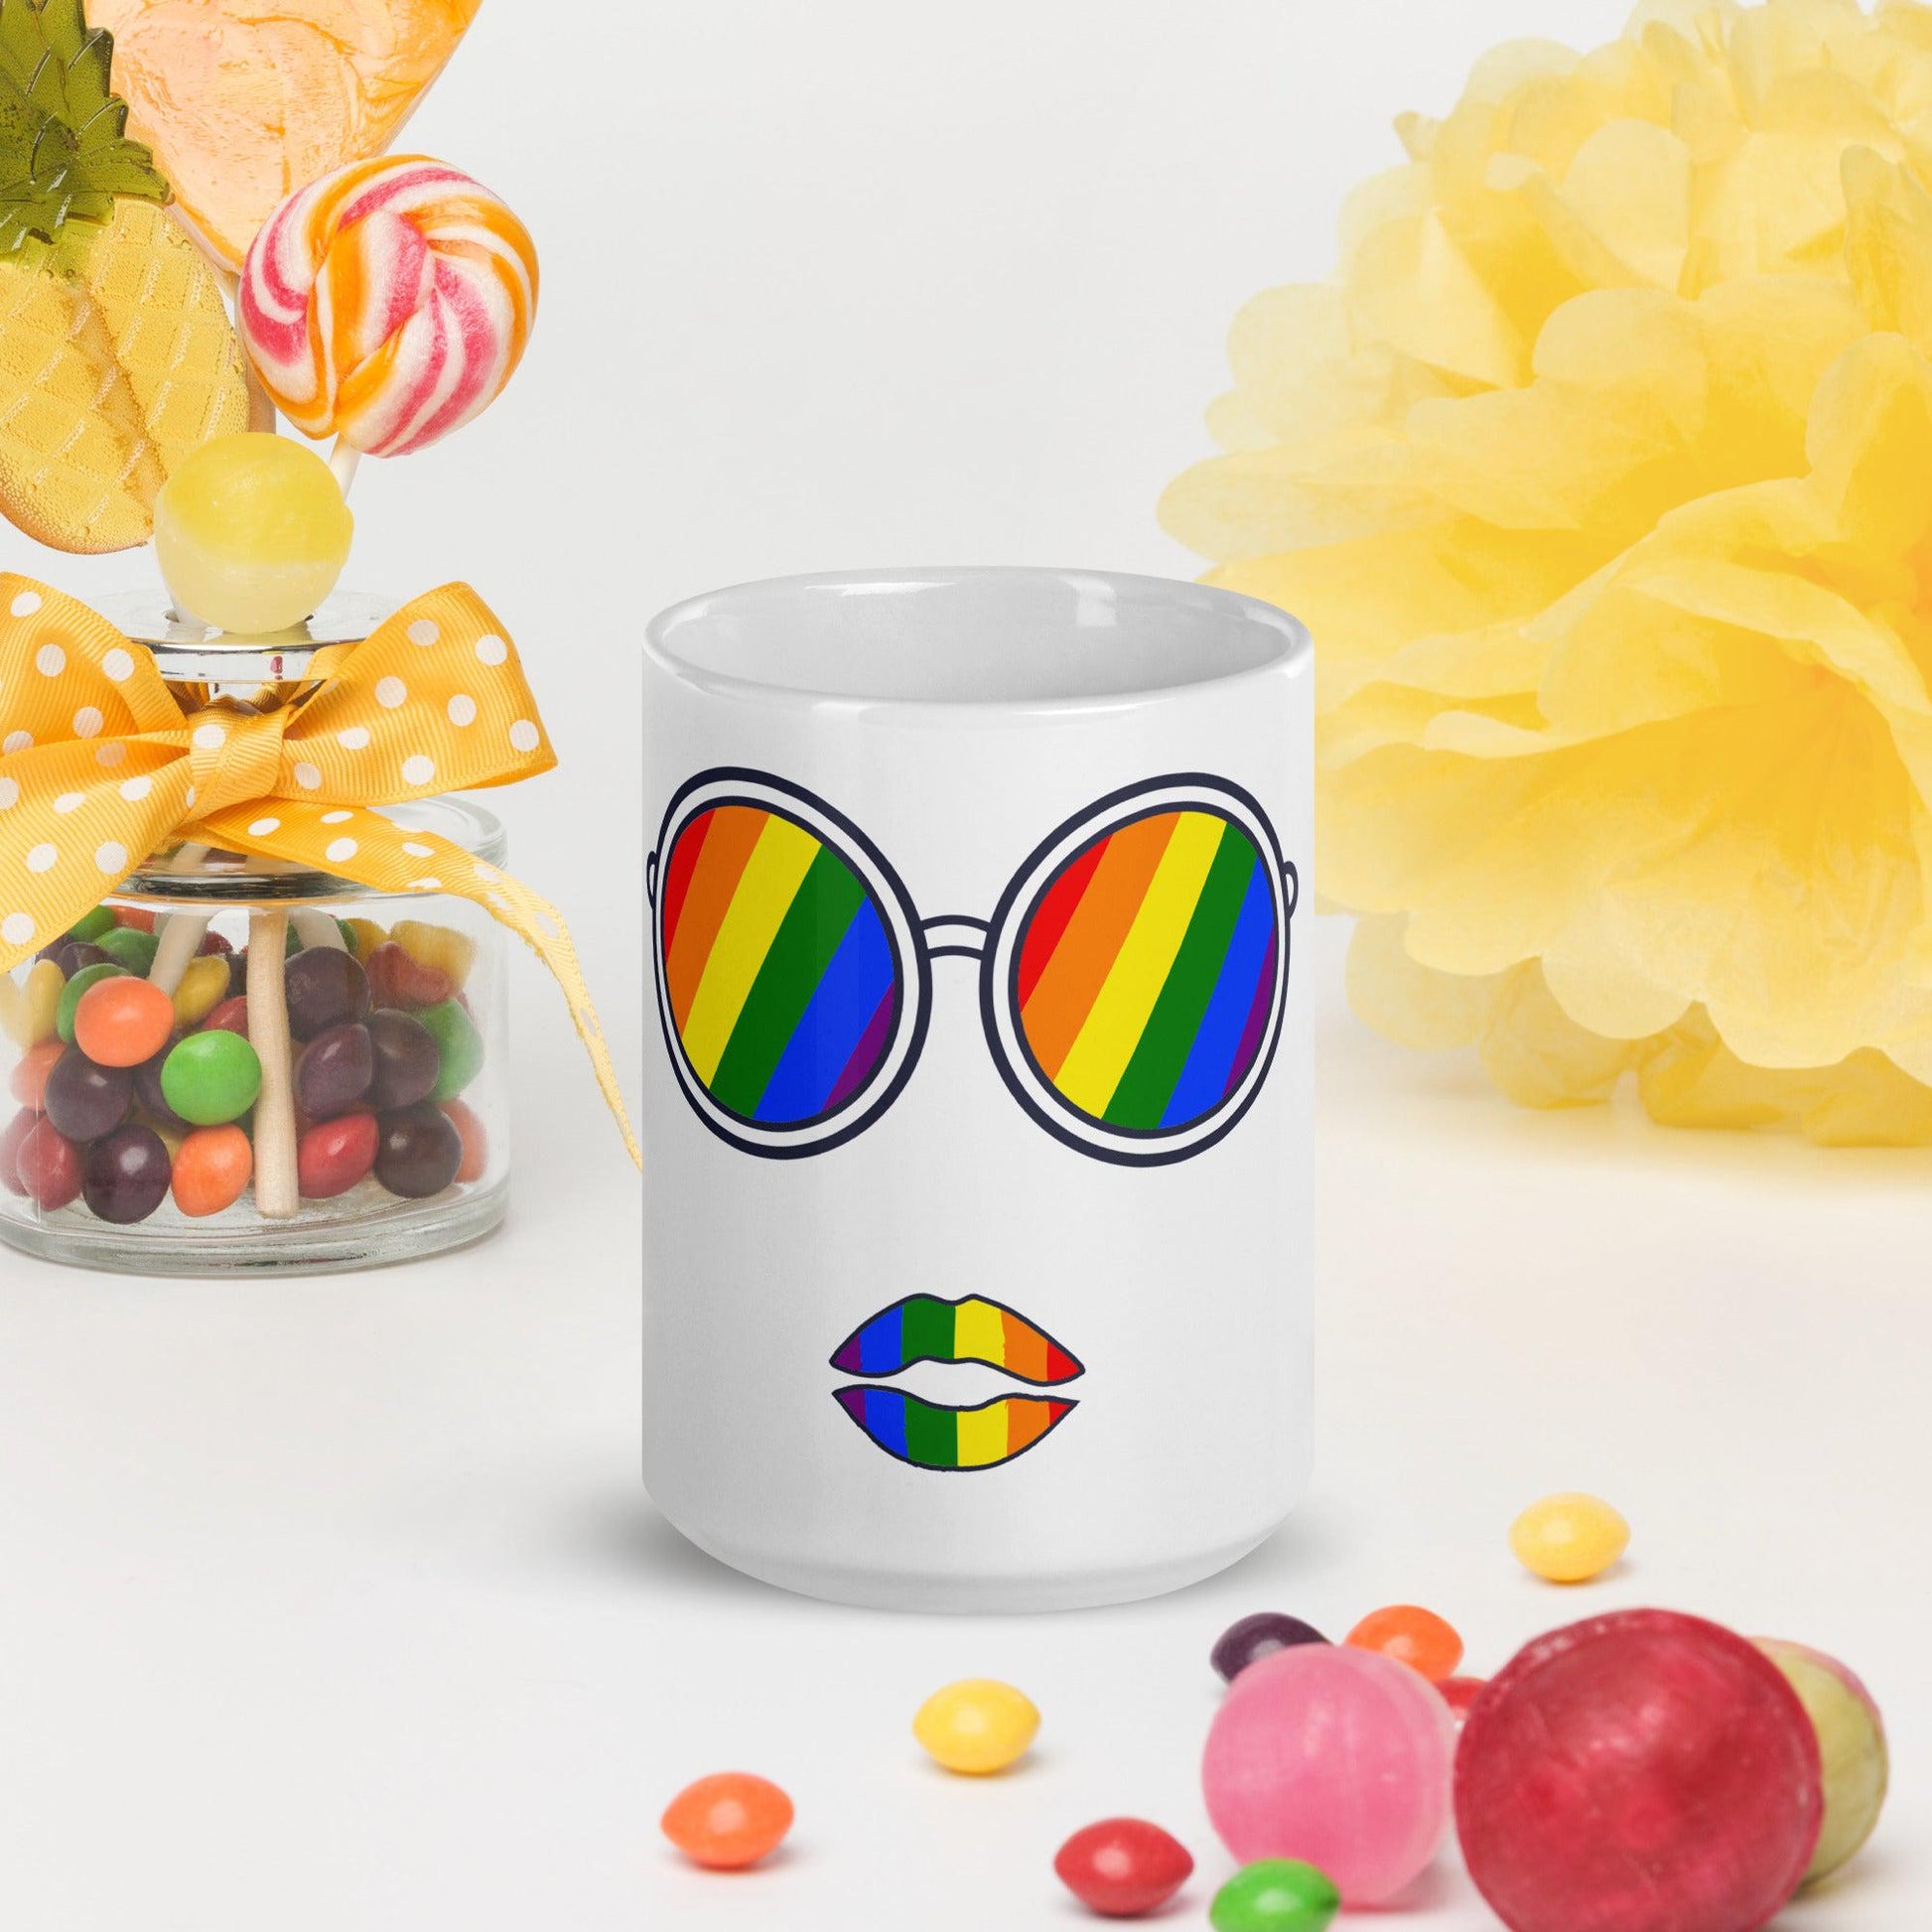 Rainbow-Themed Modern White Glossy Ceramic Mug - Colorful & Contemporary Design